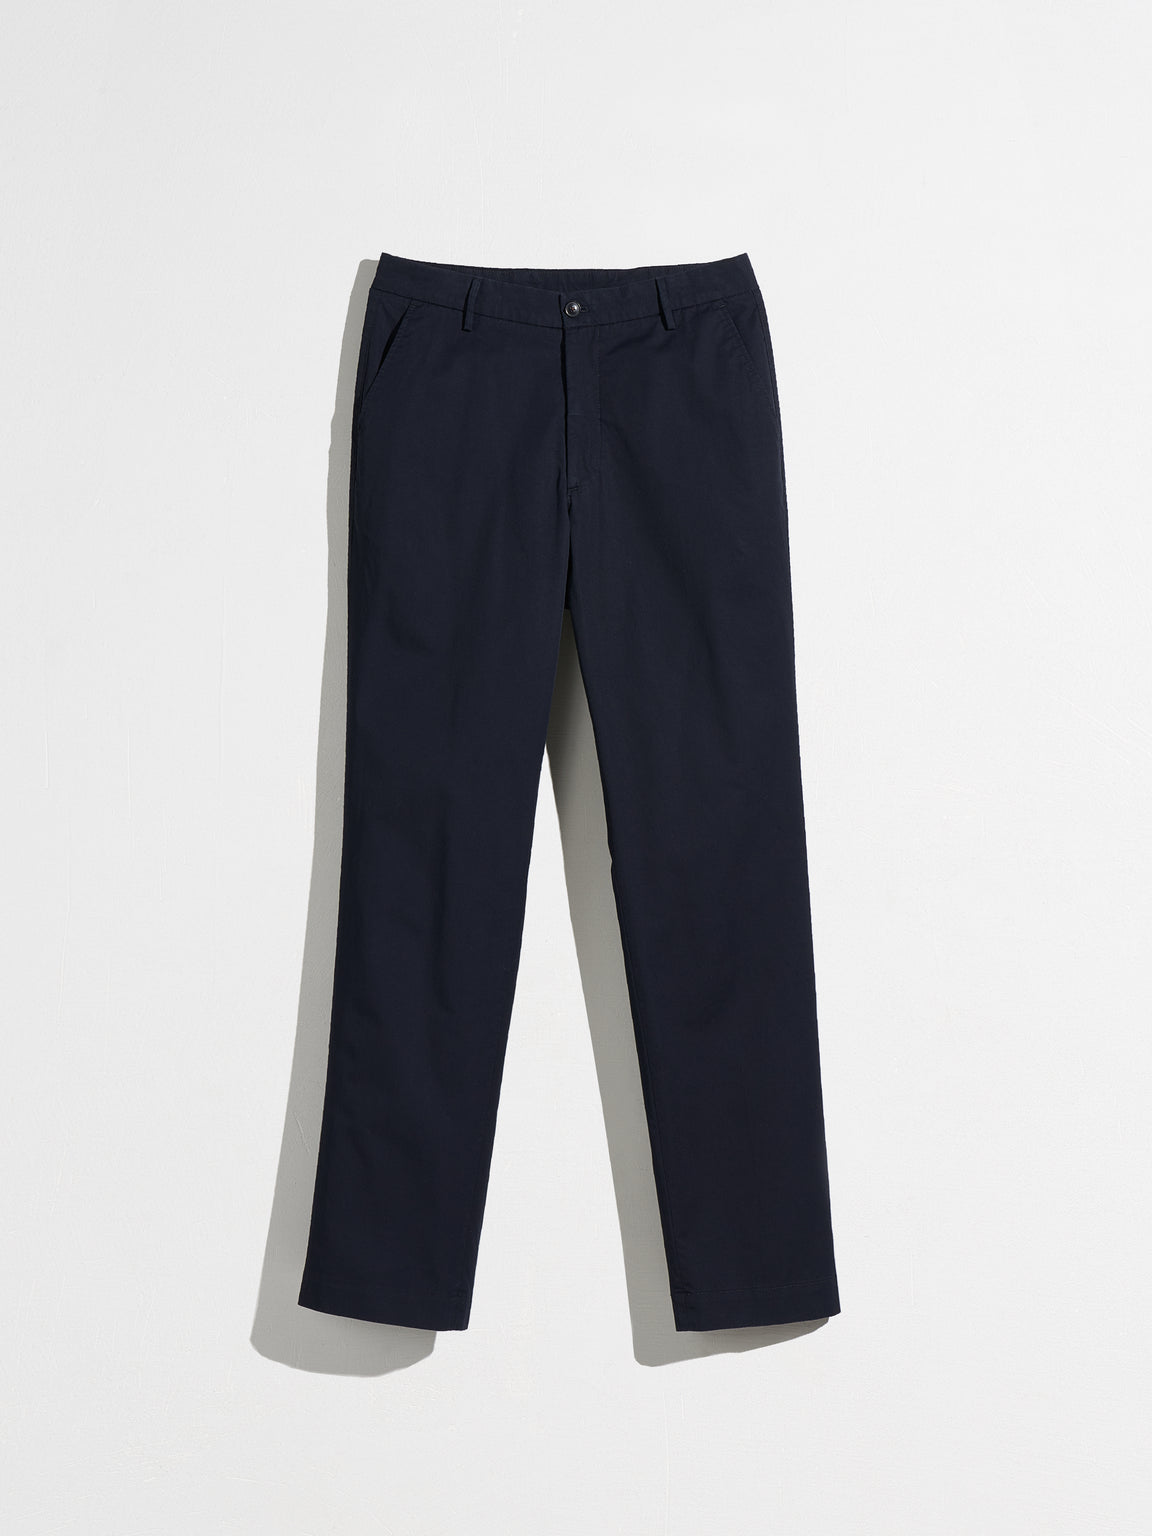 Sonoma Life + Style Women Pants Size XL Navy Blue Straight Leg